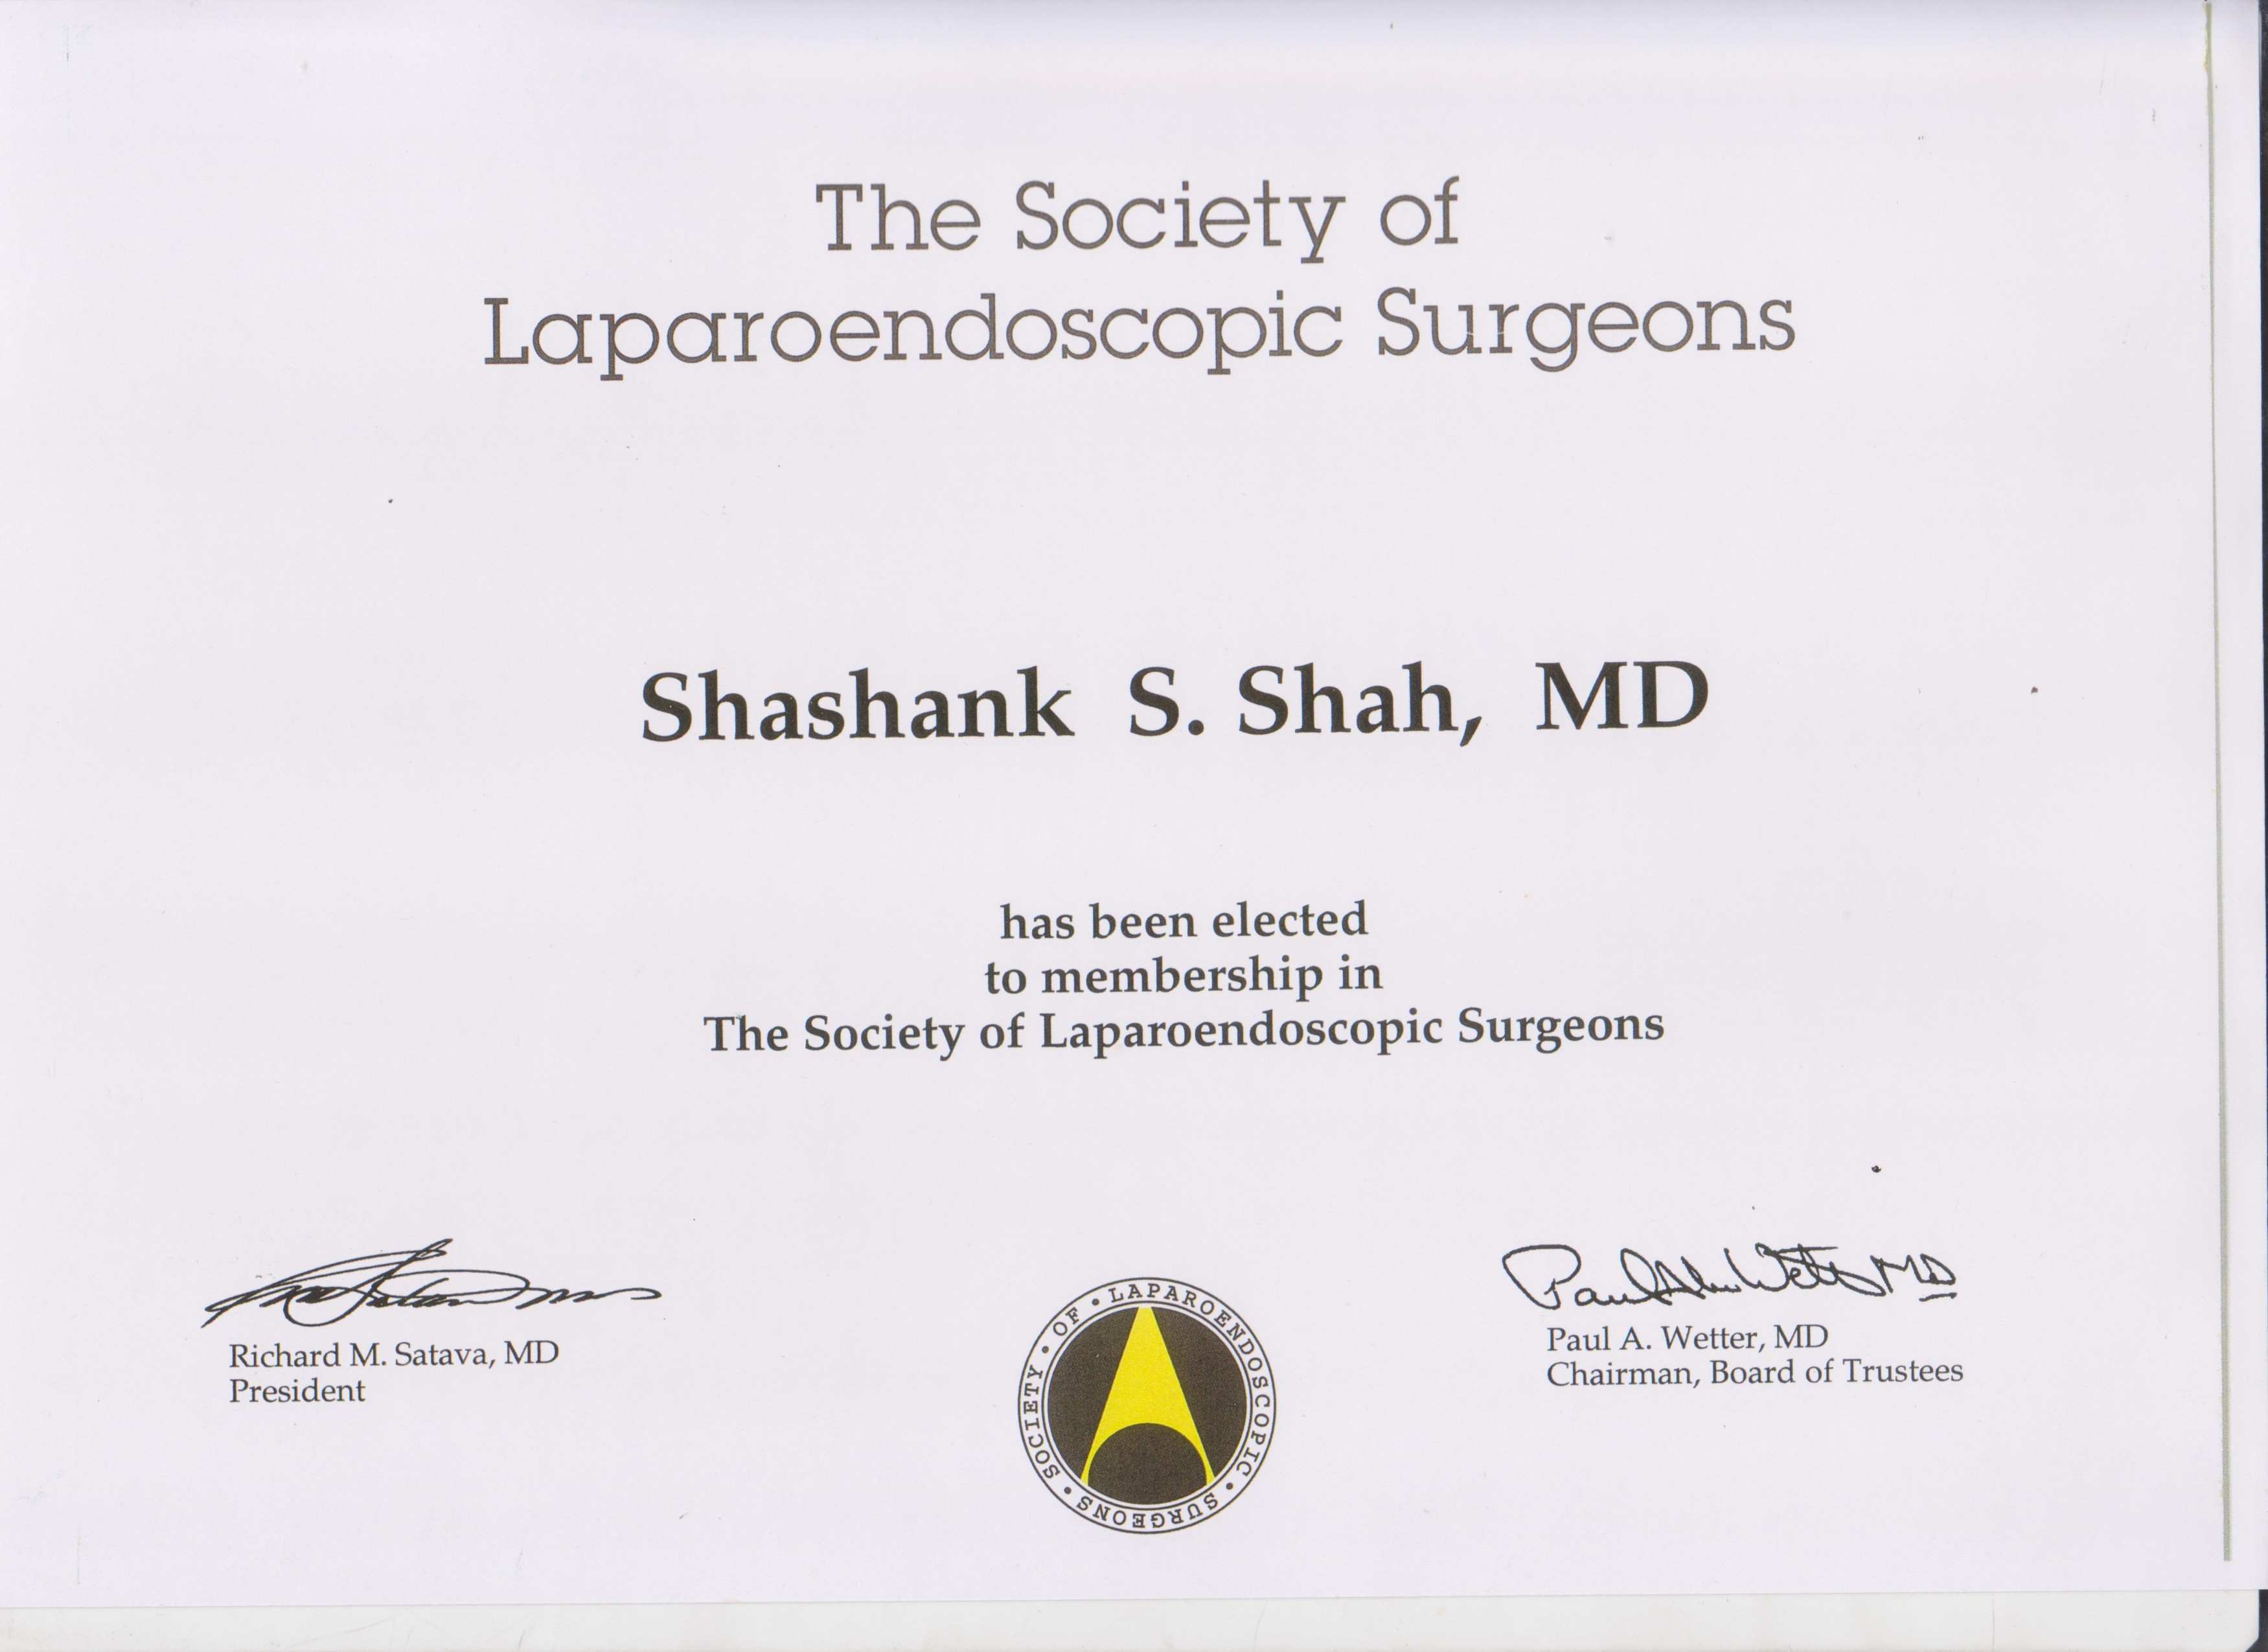 Dr Shashank Shah’s Certificate of Membership to the Society of Laparoendoscopic Surgeons.